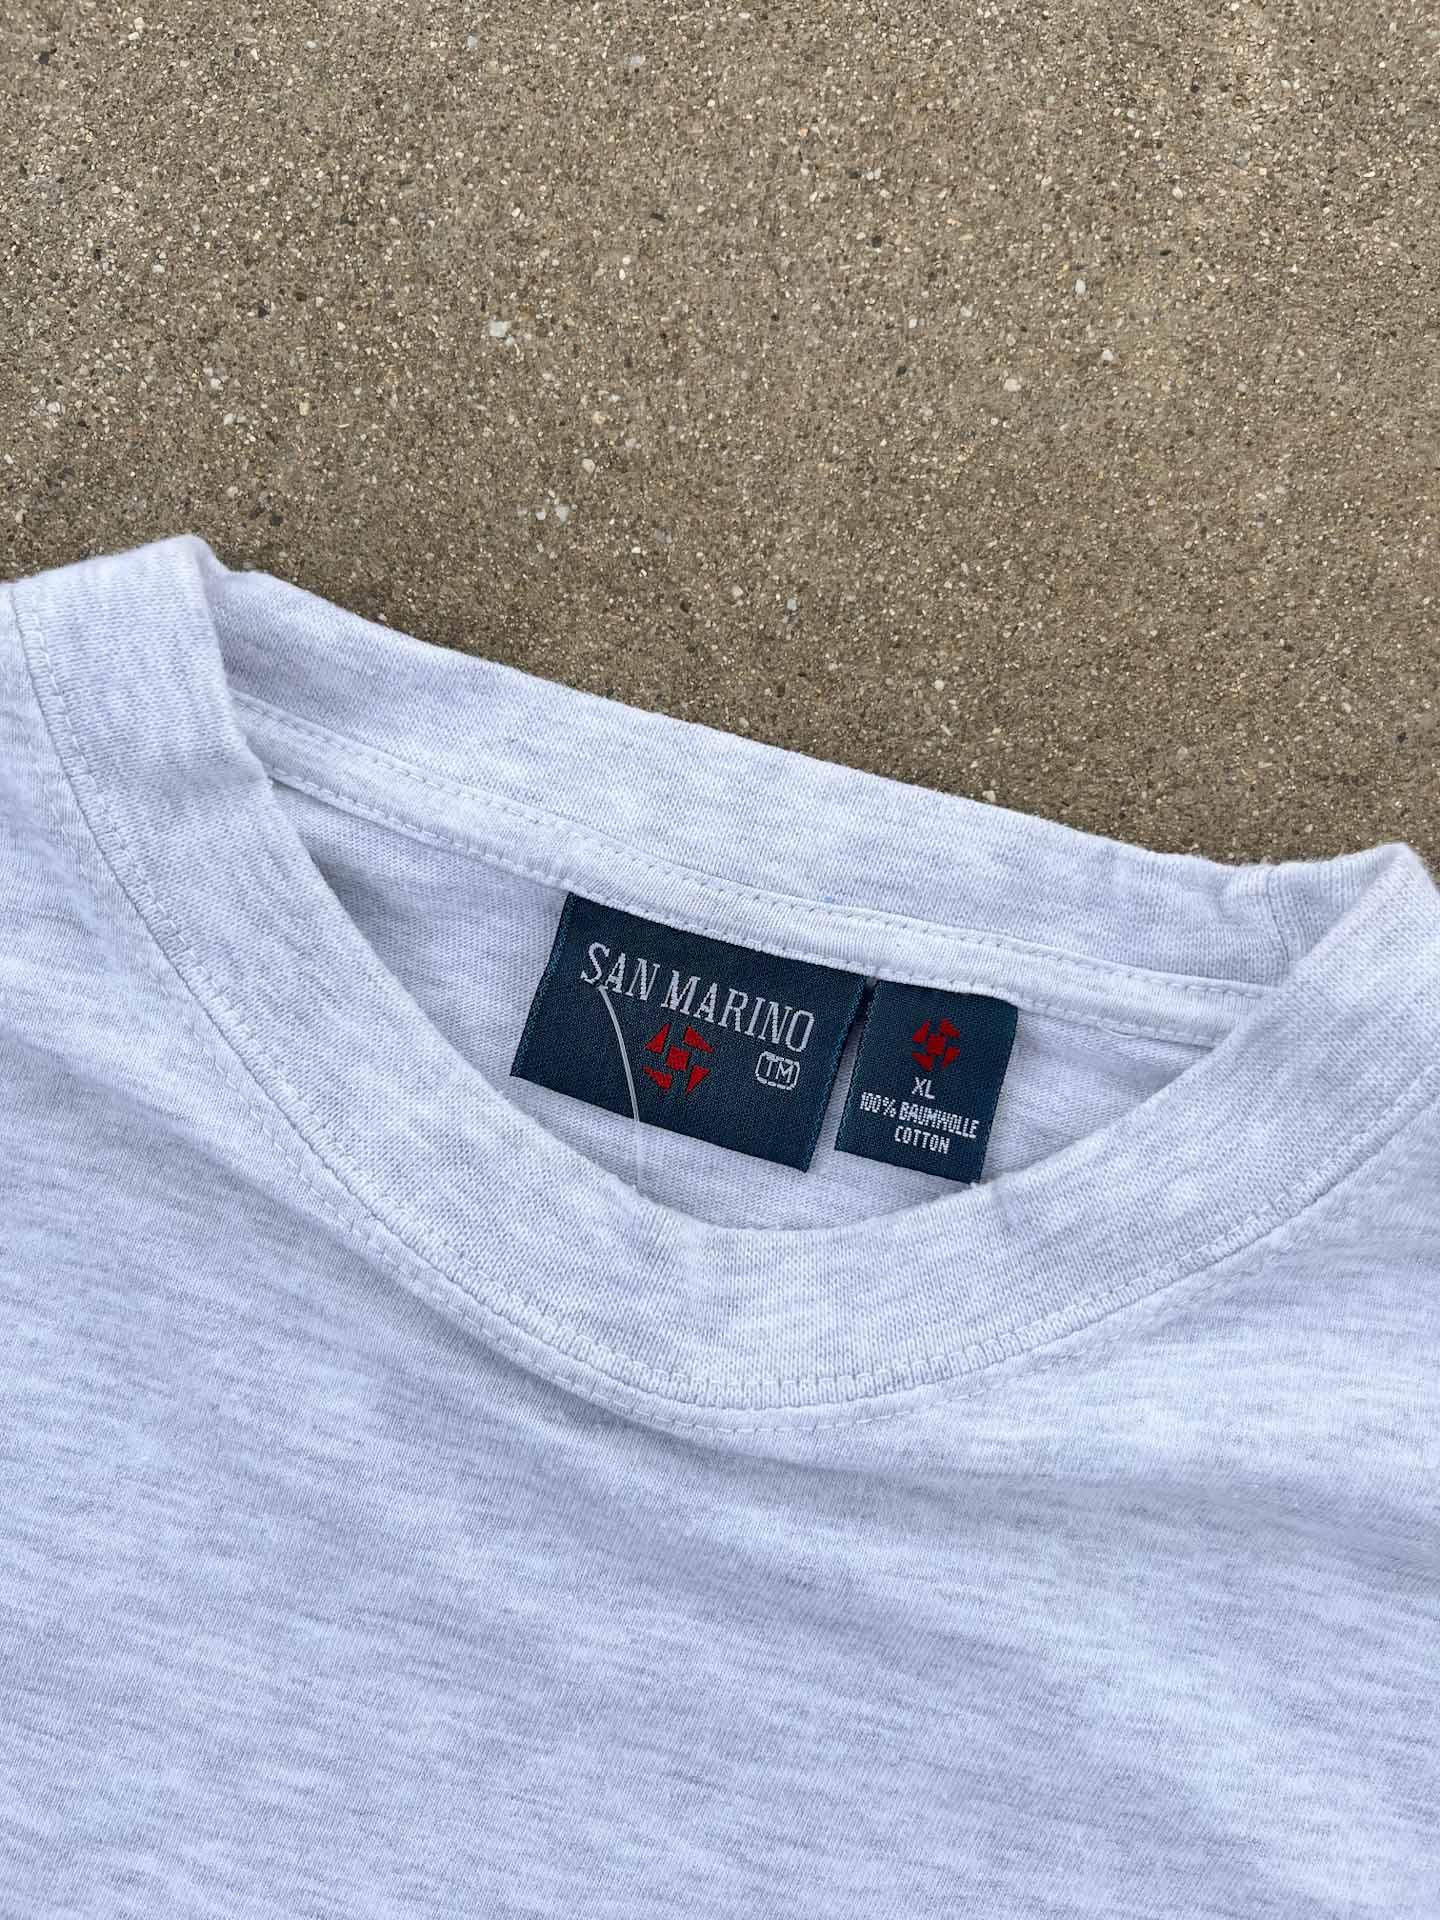 San Marion backprint T-Shirt - secondvintage